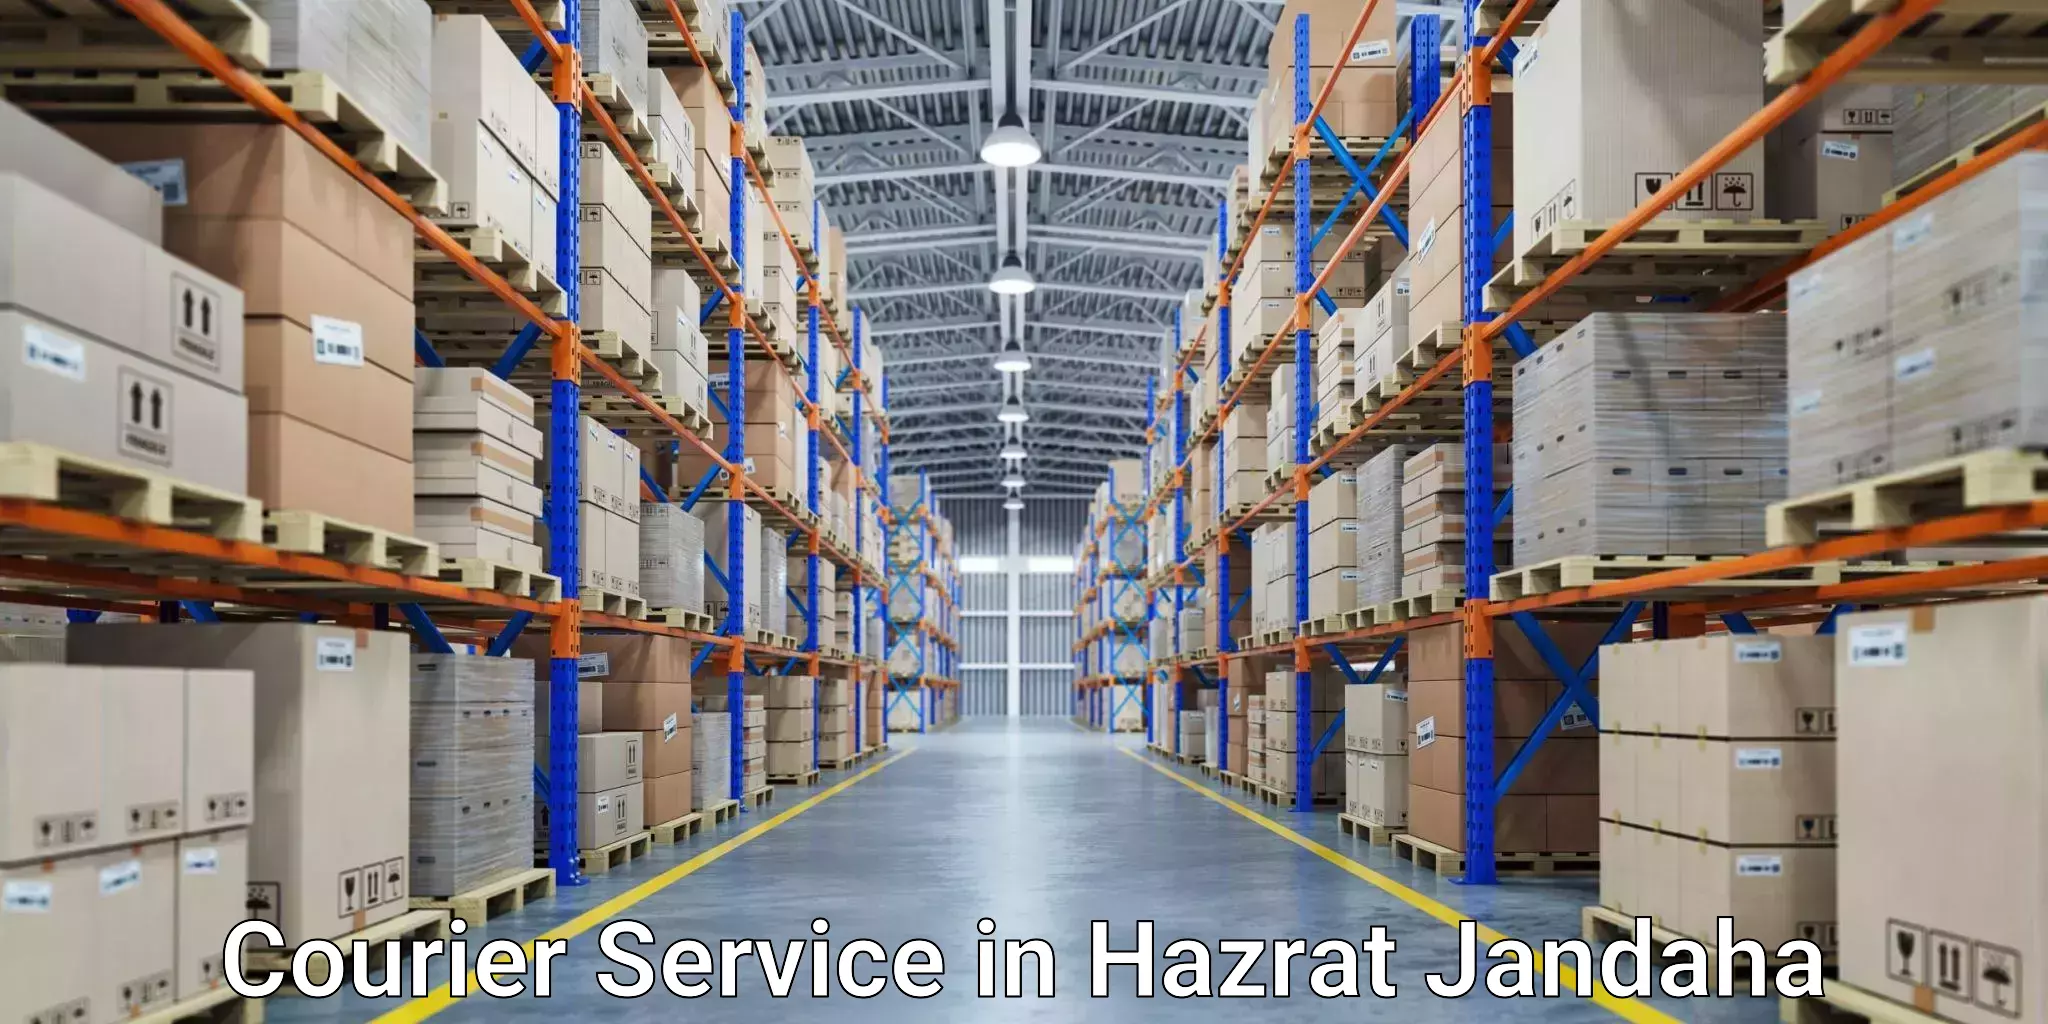 Express postal services in Hazrat Jandaha